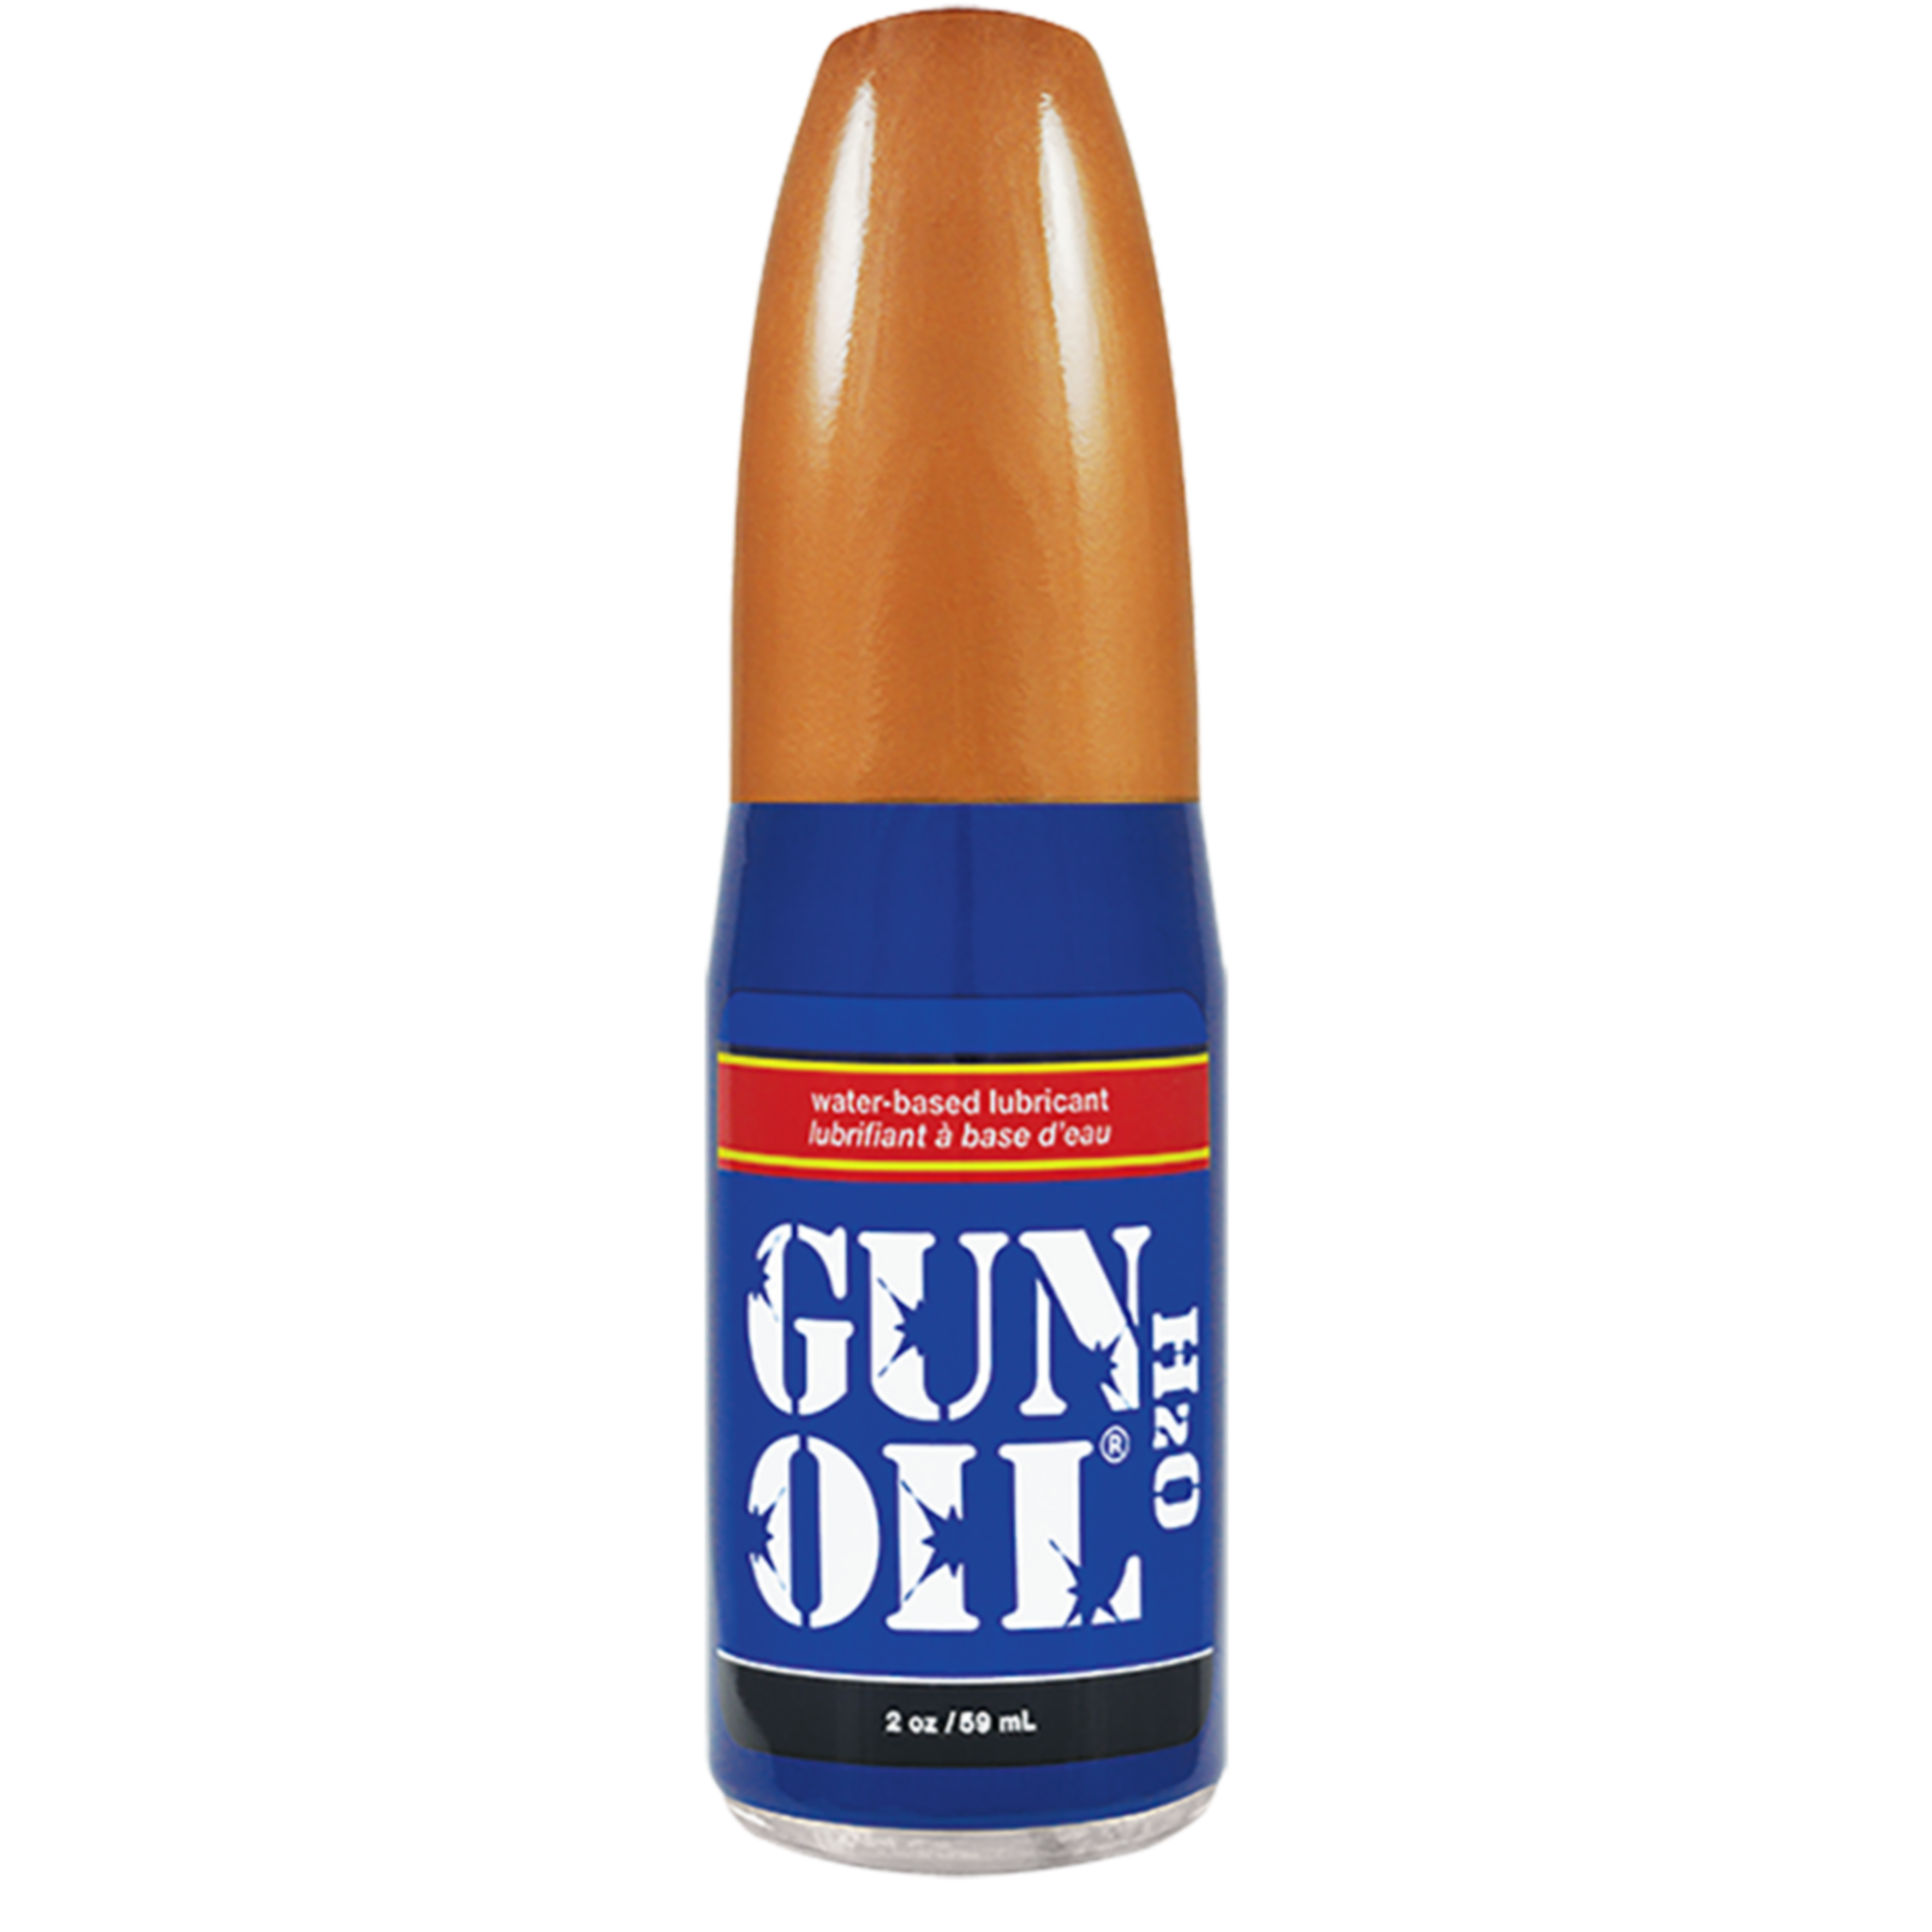 Gun Oil H2O Lube - Water Based Liquid Personal Lubricant - 2 fl.oz / 59 mL - image 1 of 6